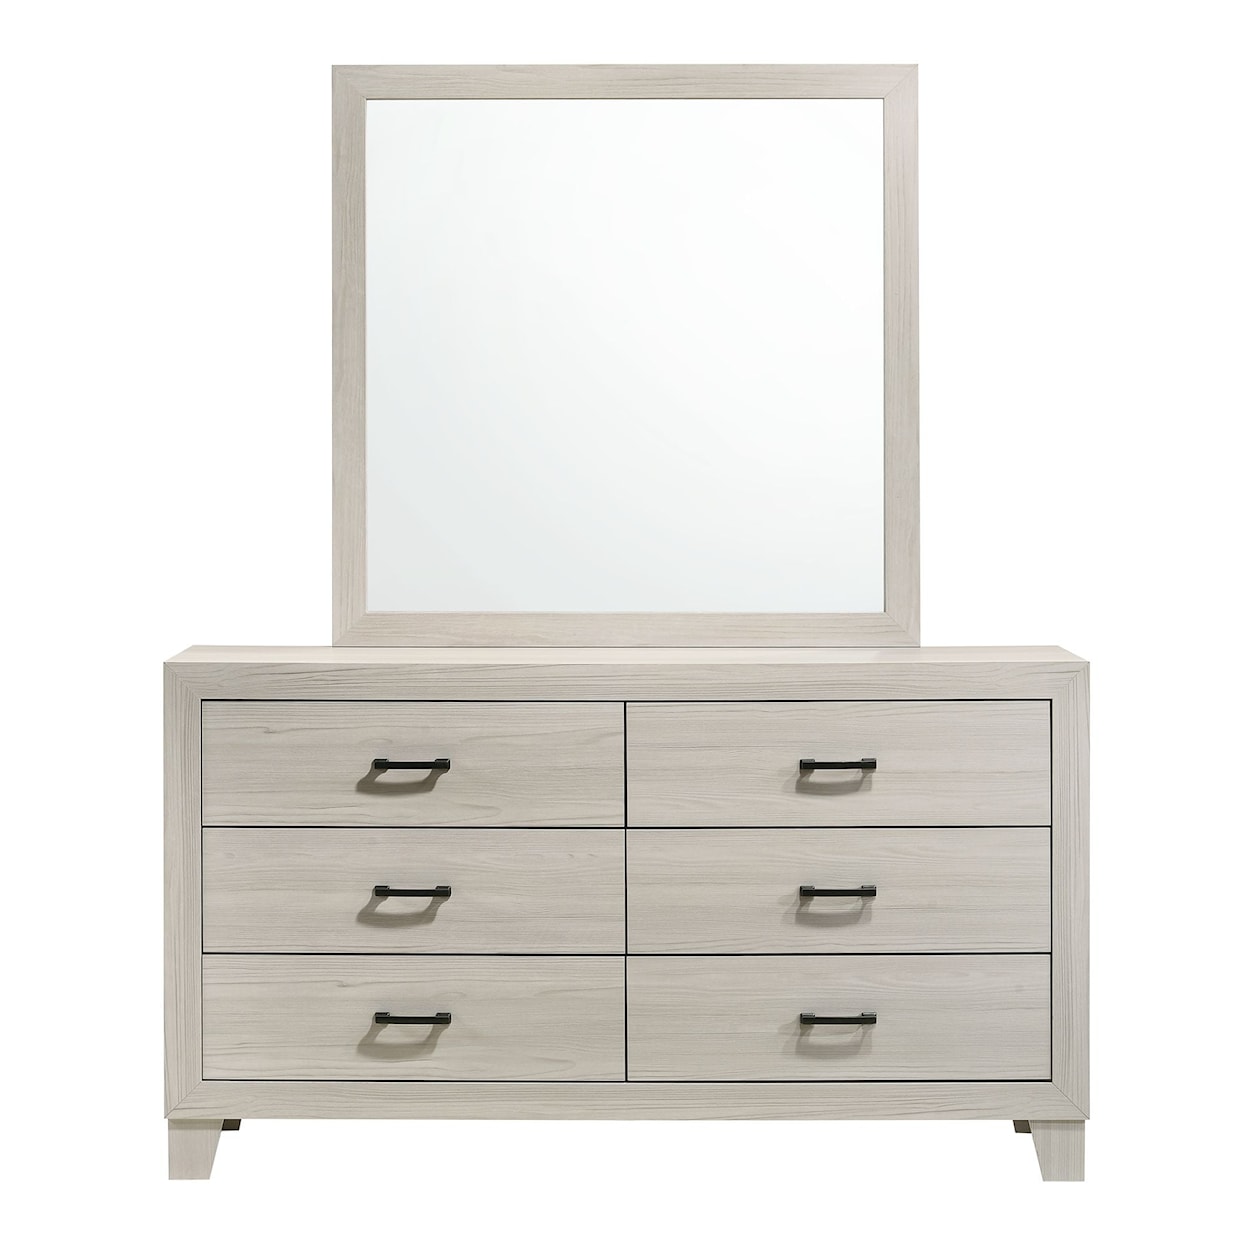 Elements International Makayla Dresser and Mirror Set